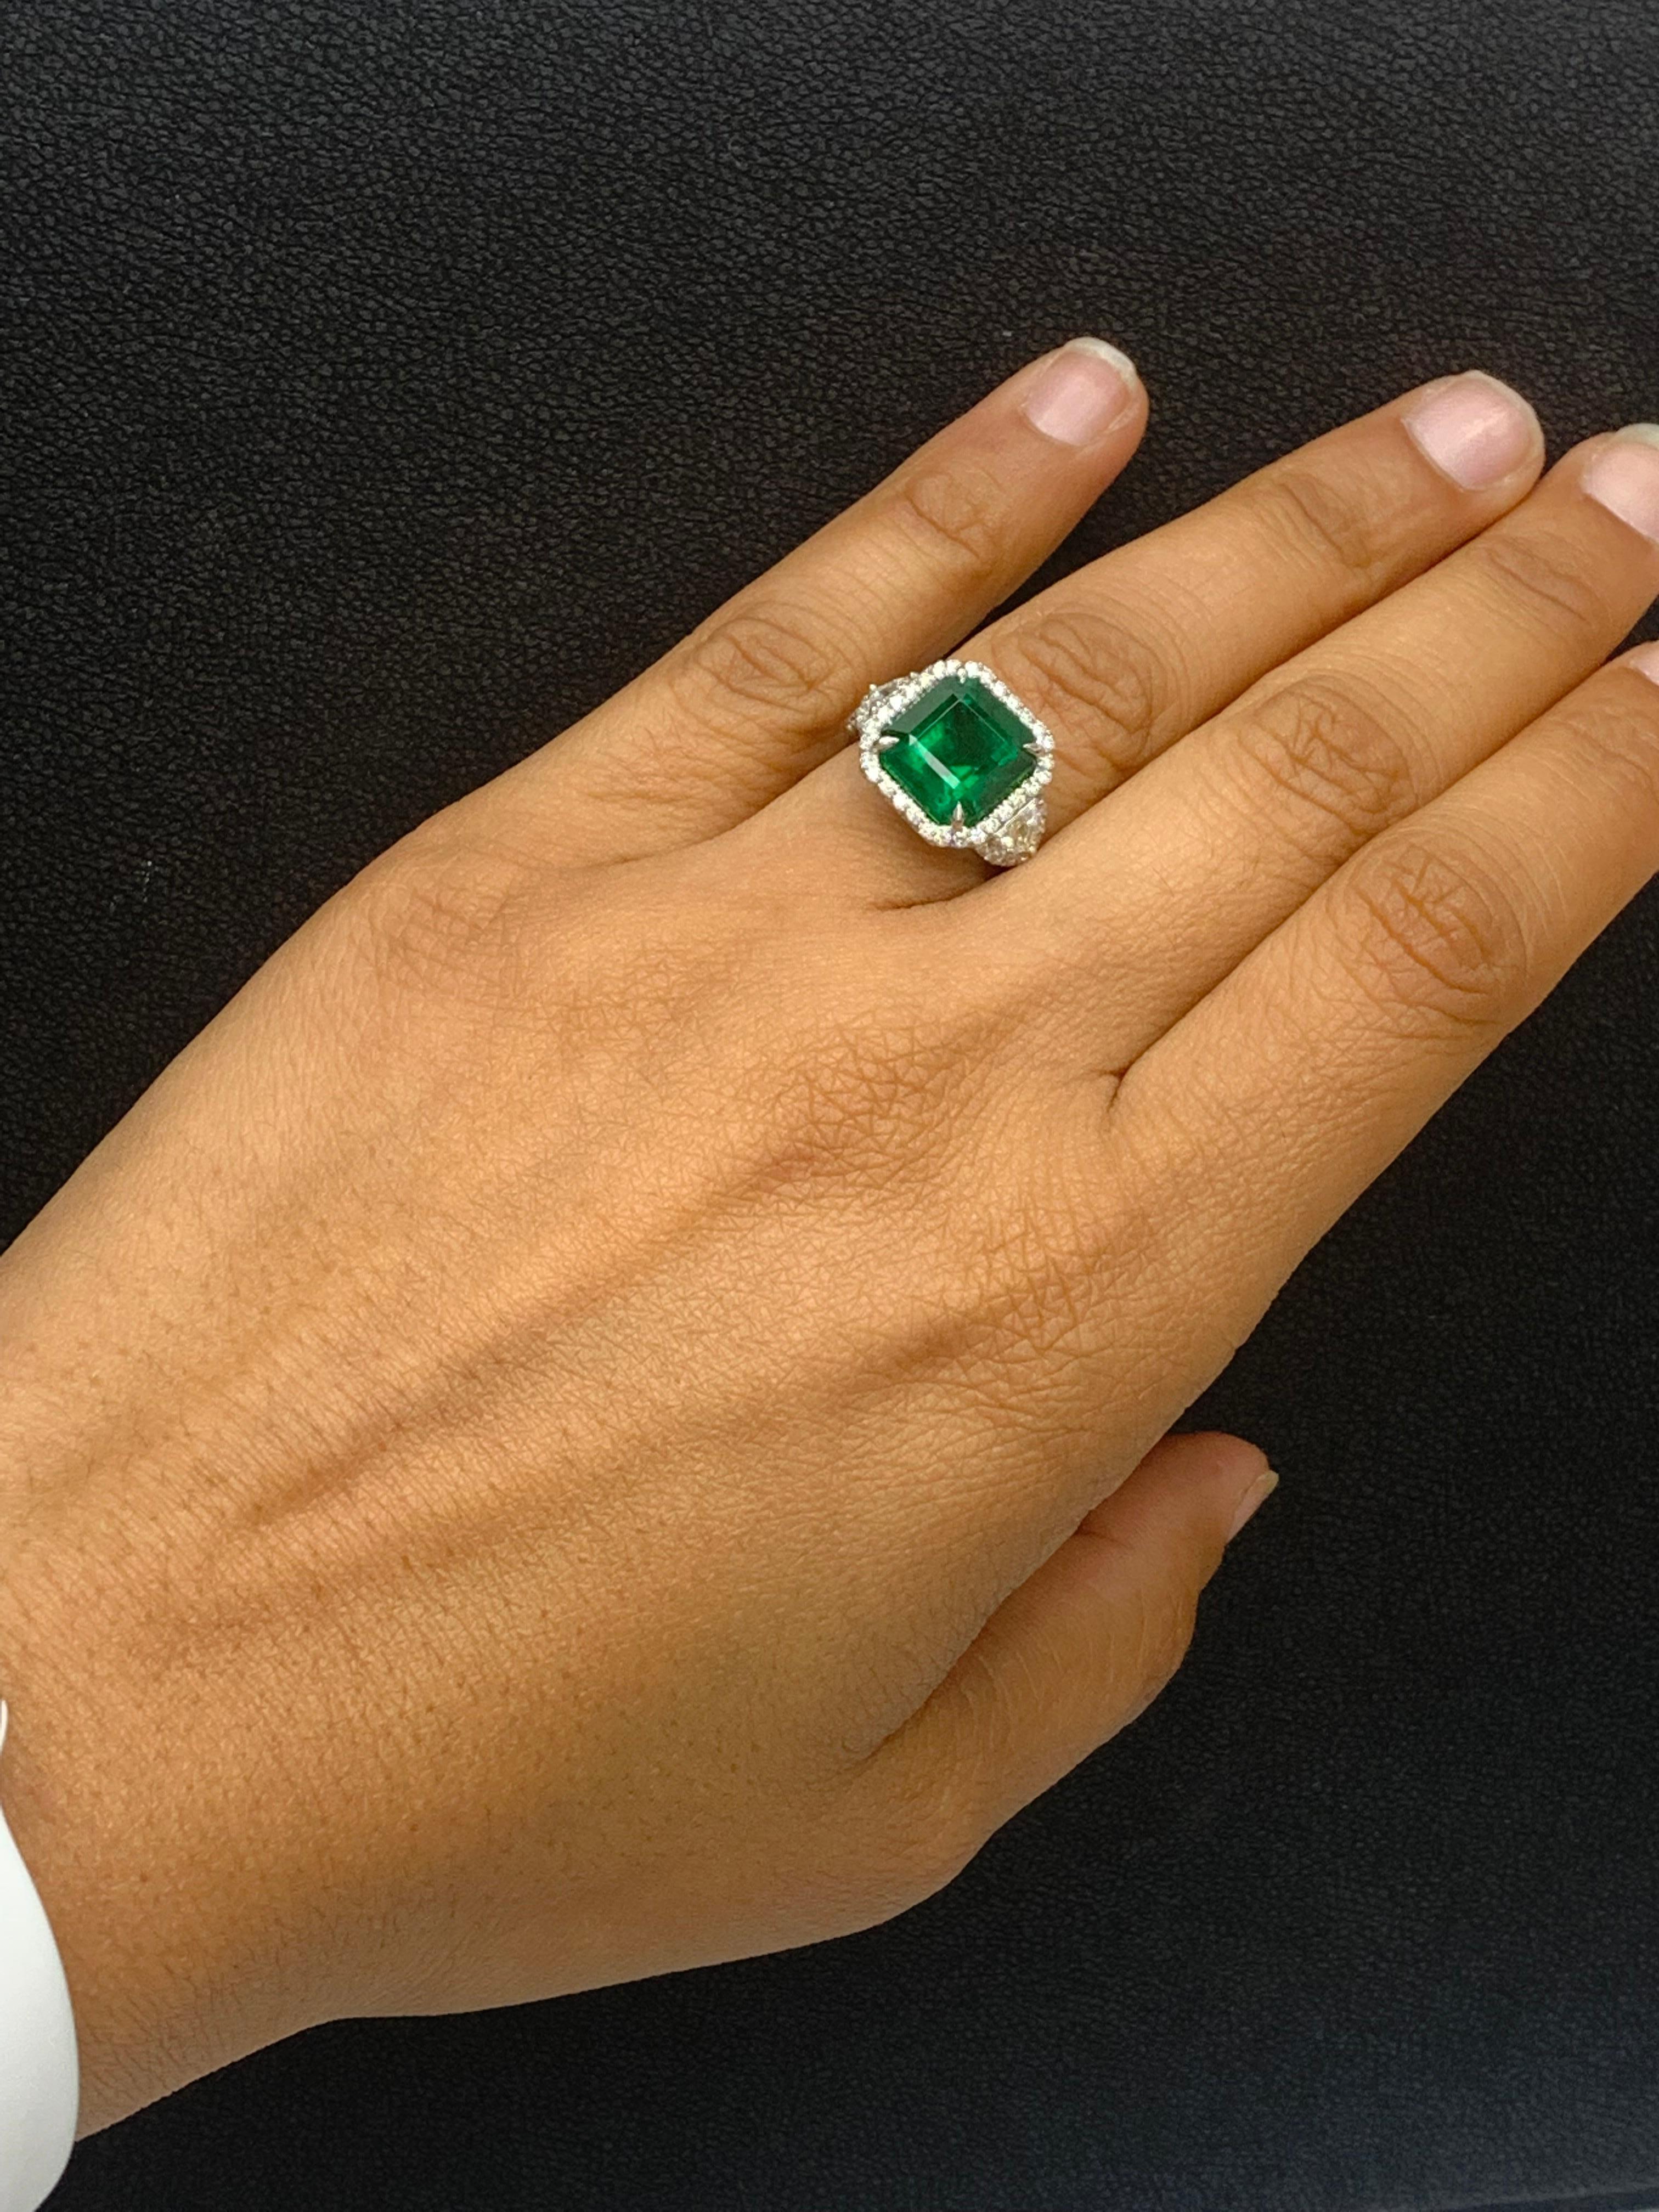 Certified 5.23 Carat Emerald Cut Emerald Diamond 3 Stone Halo Ring in Platinum For Sale 5